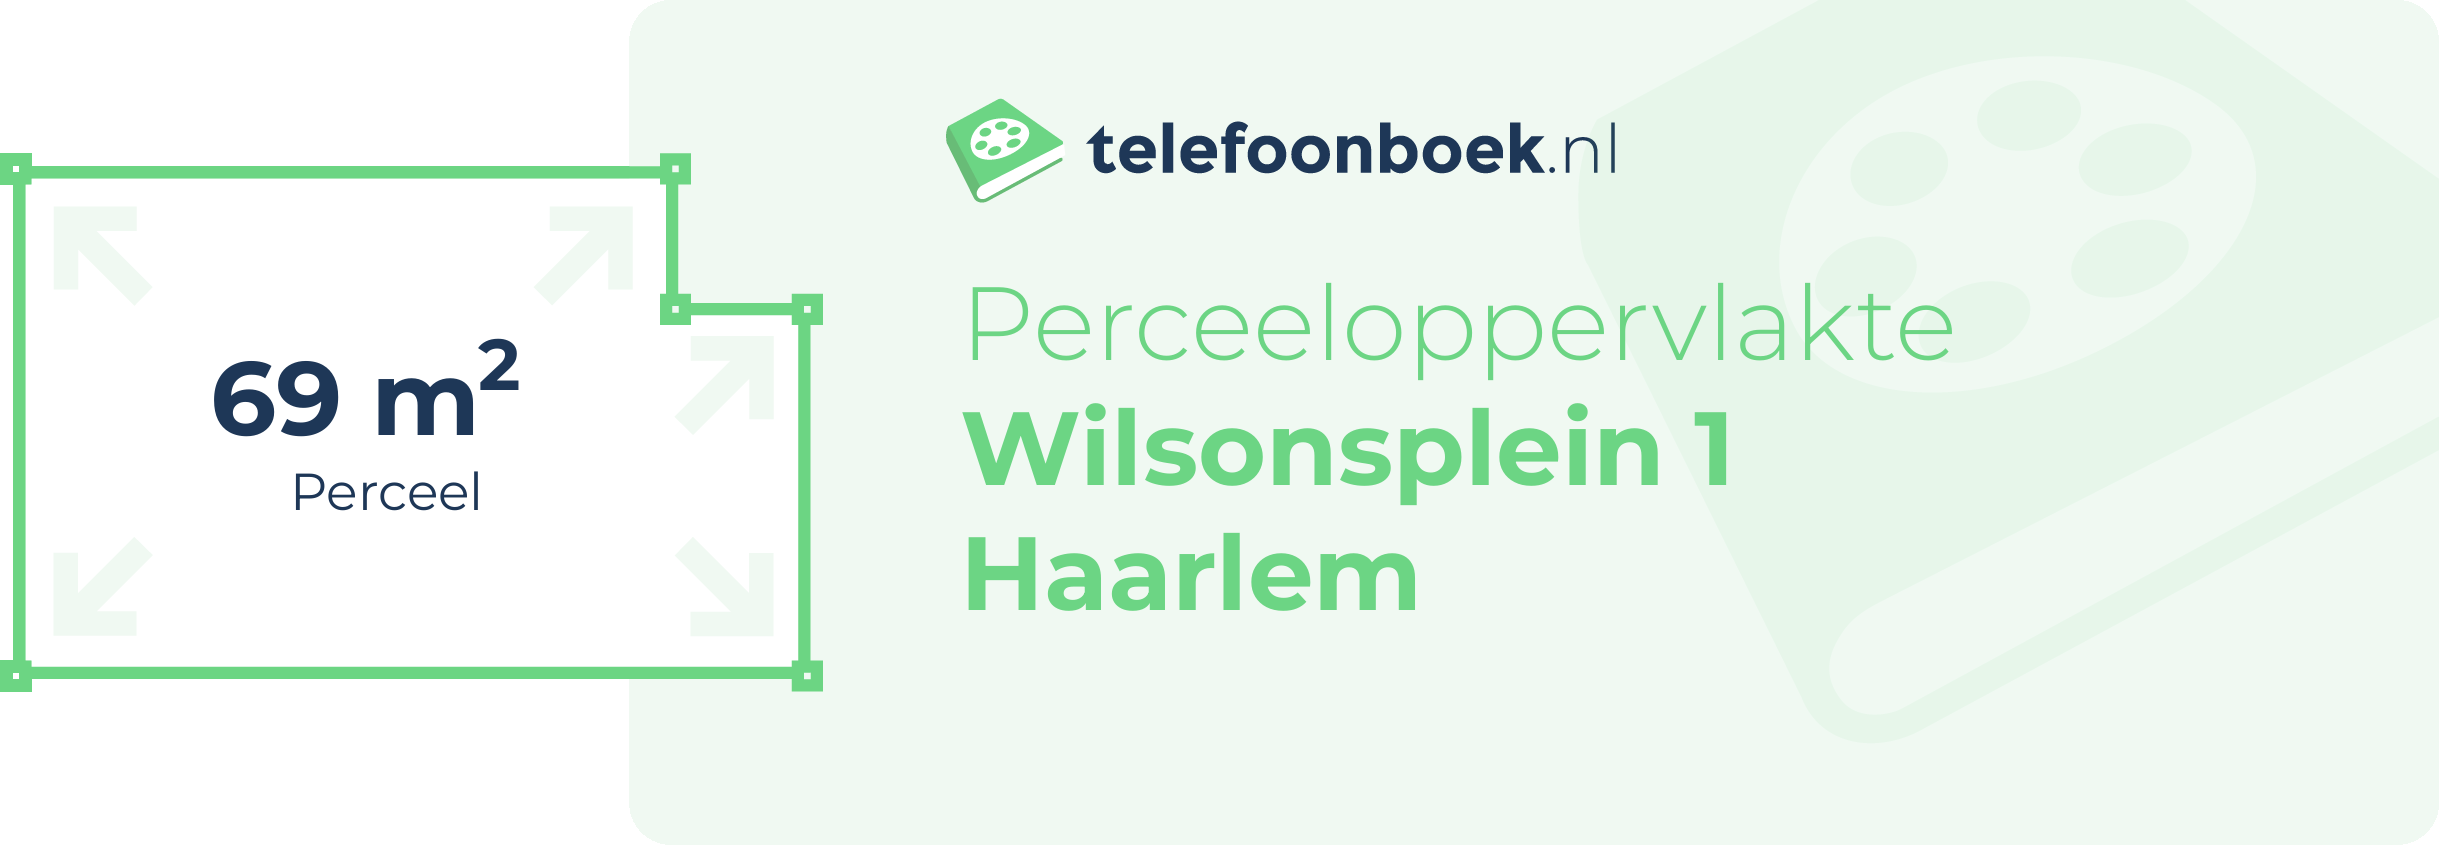 Perceeloppervlakte Wilsonsplein 1 Haarlem